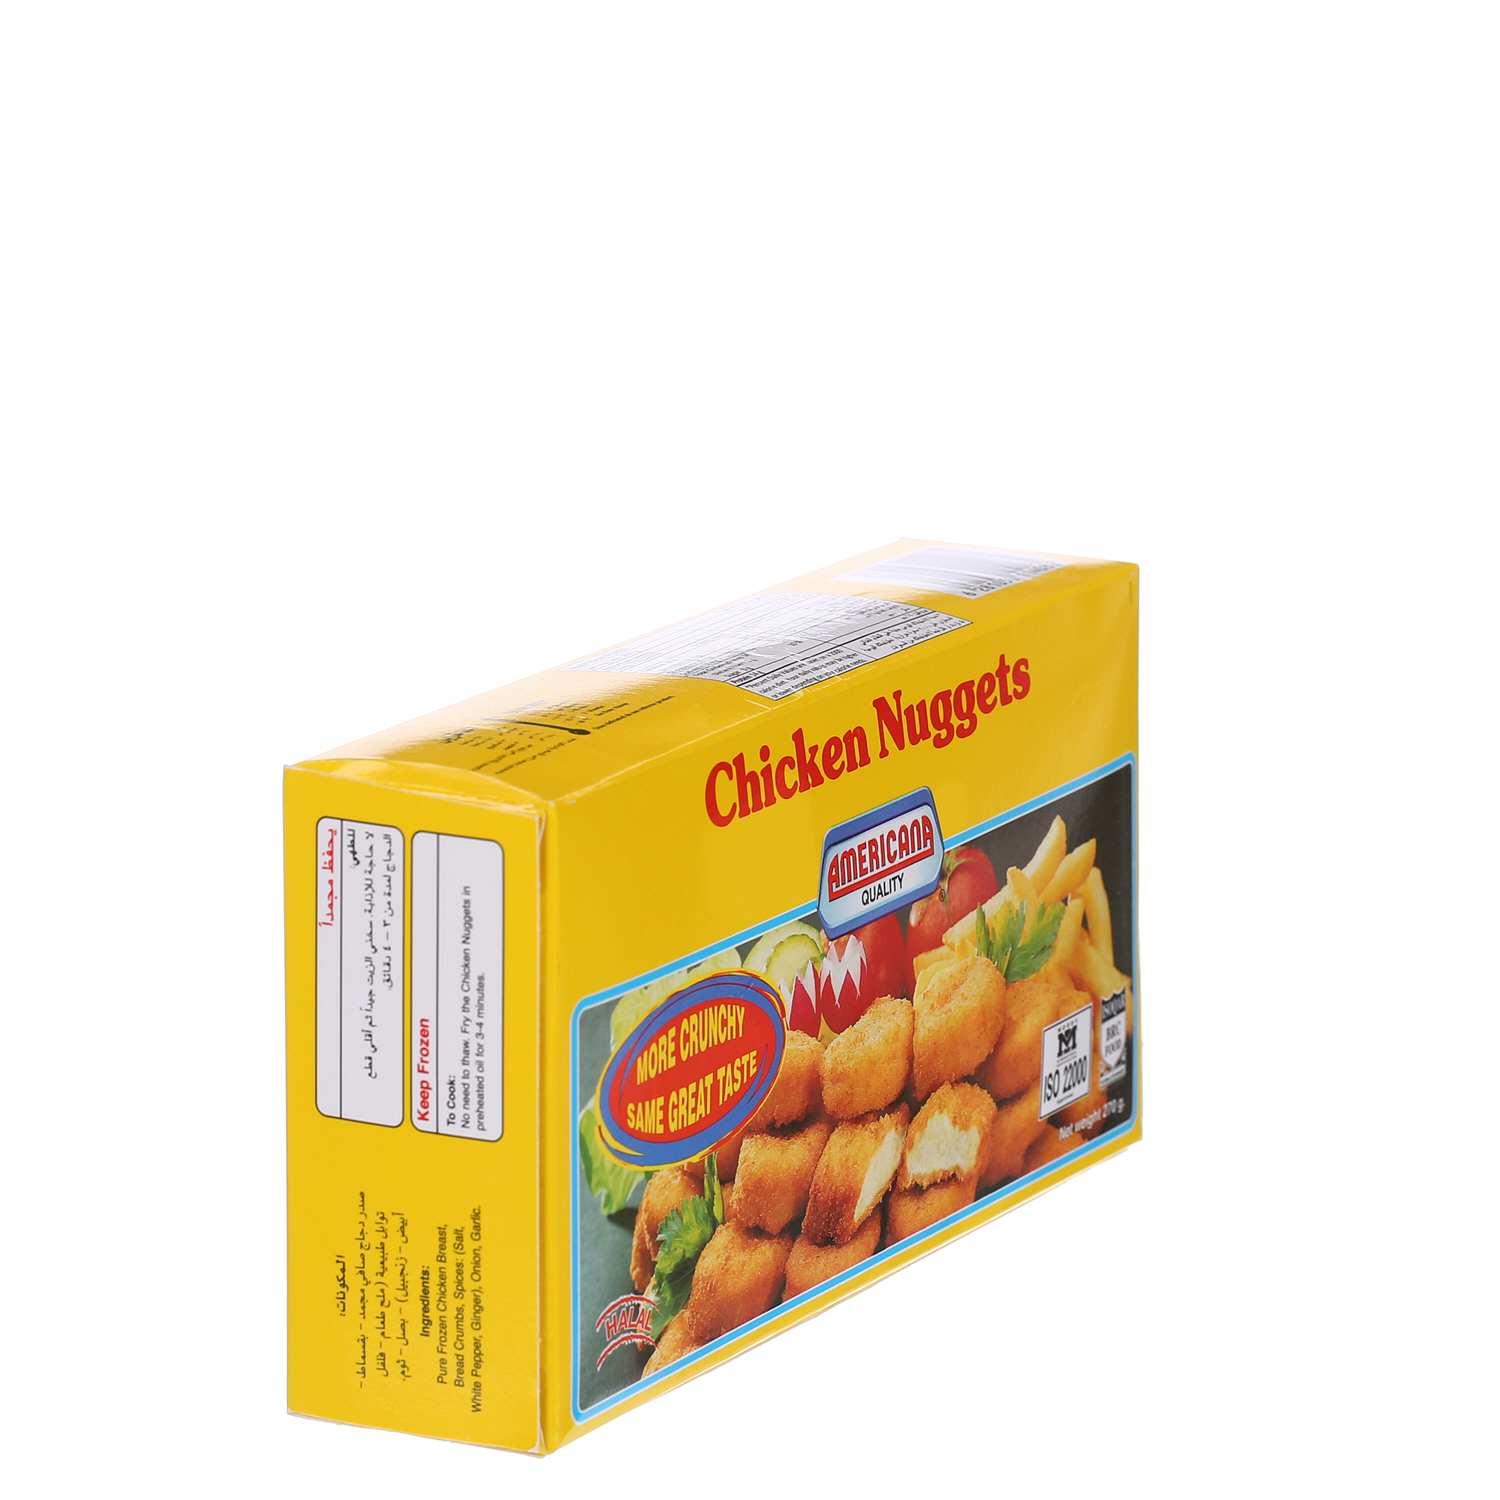 Americana Chicken Nuggets 270 g